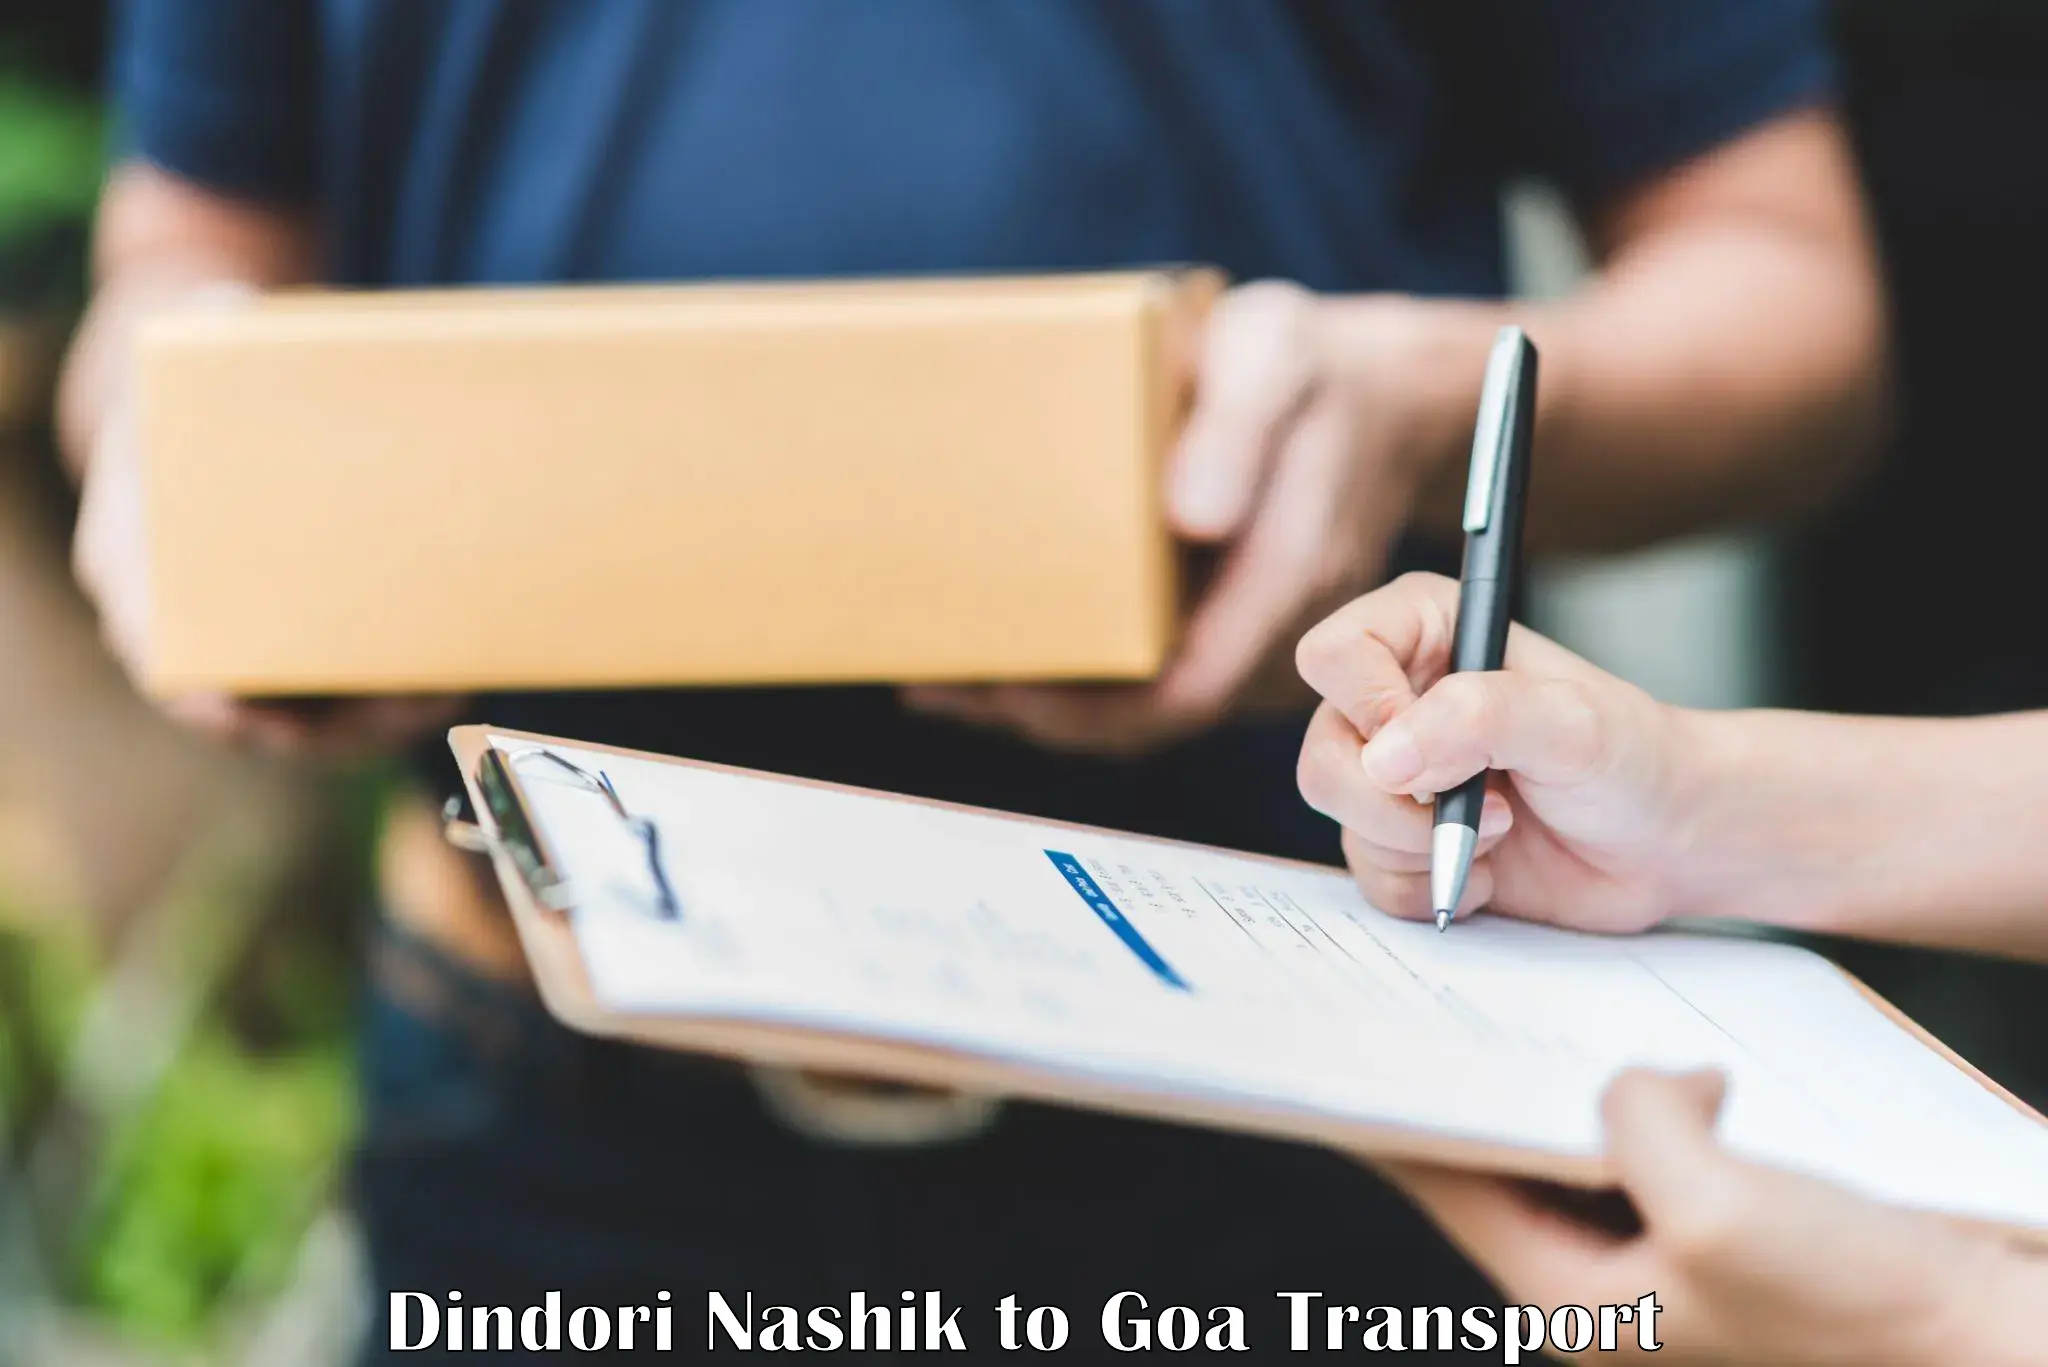 Nationwide transport services Dindori Nashik to Goa University